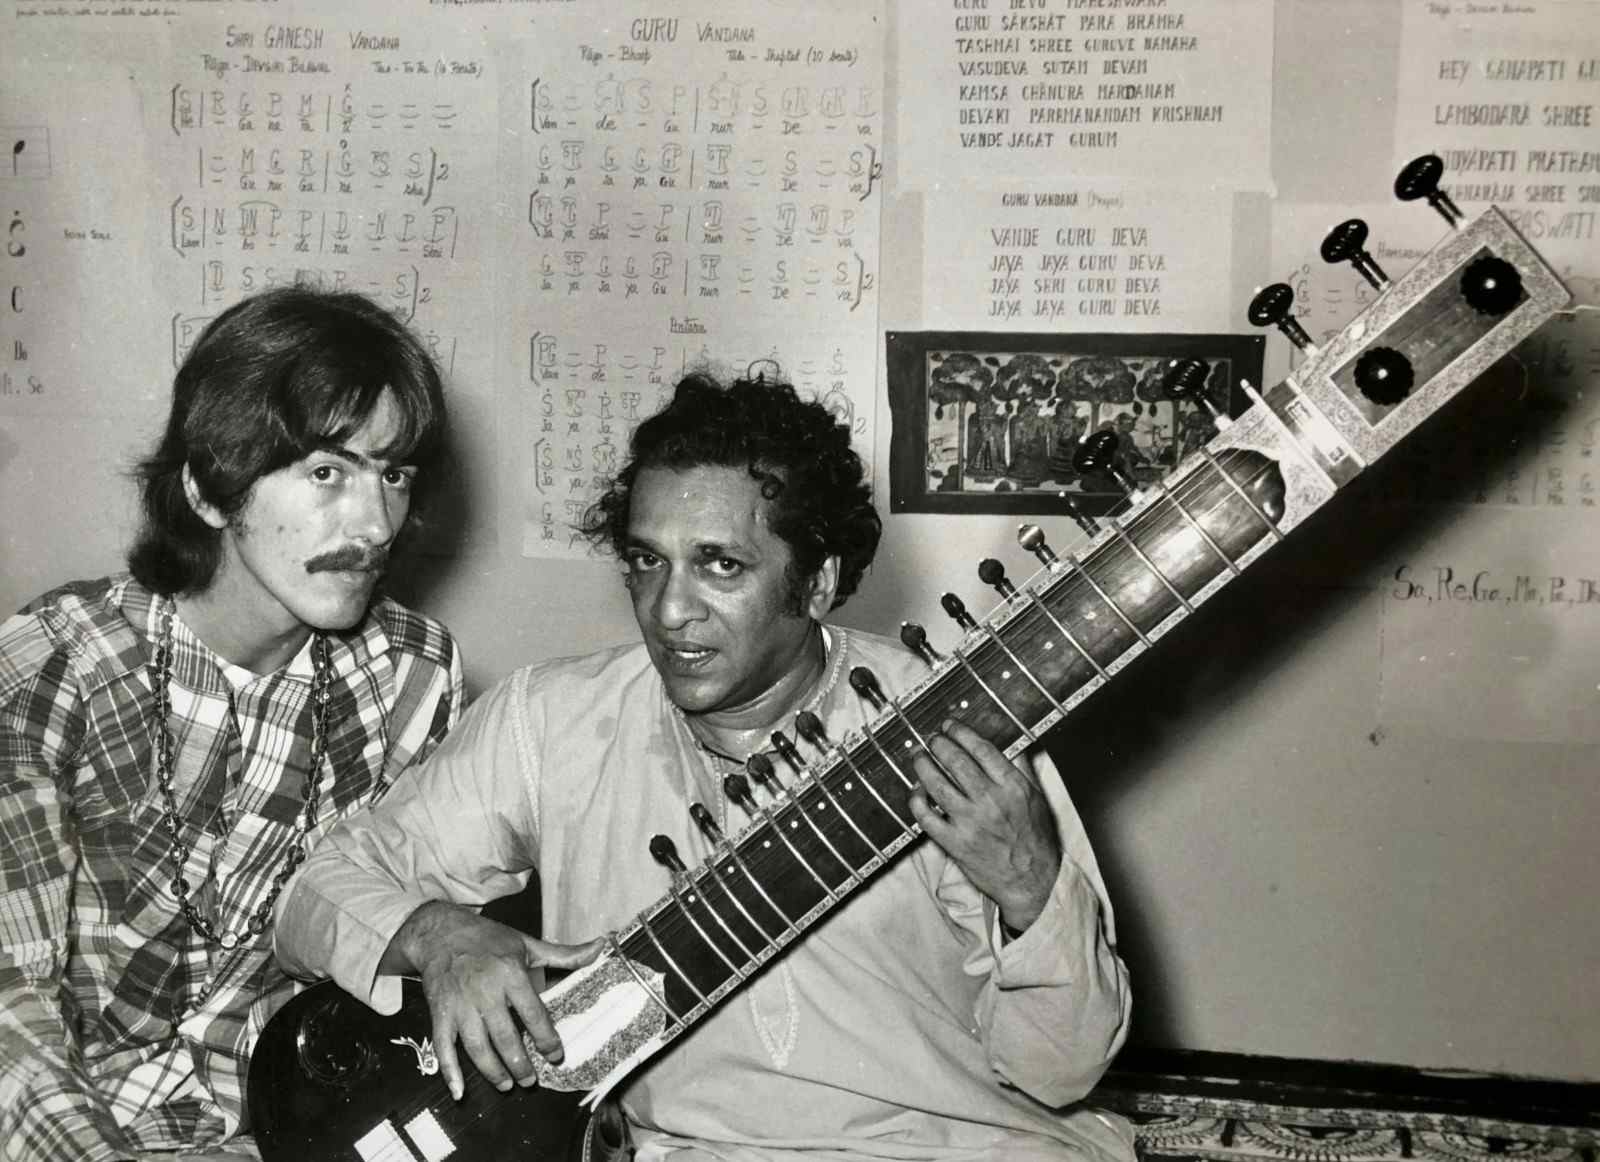 Ravi Shankar and George Harrison in Los Angeles in 1967 (Courtesy of the Ravi Shankar Foundation)